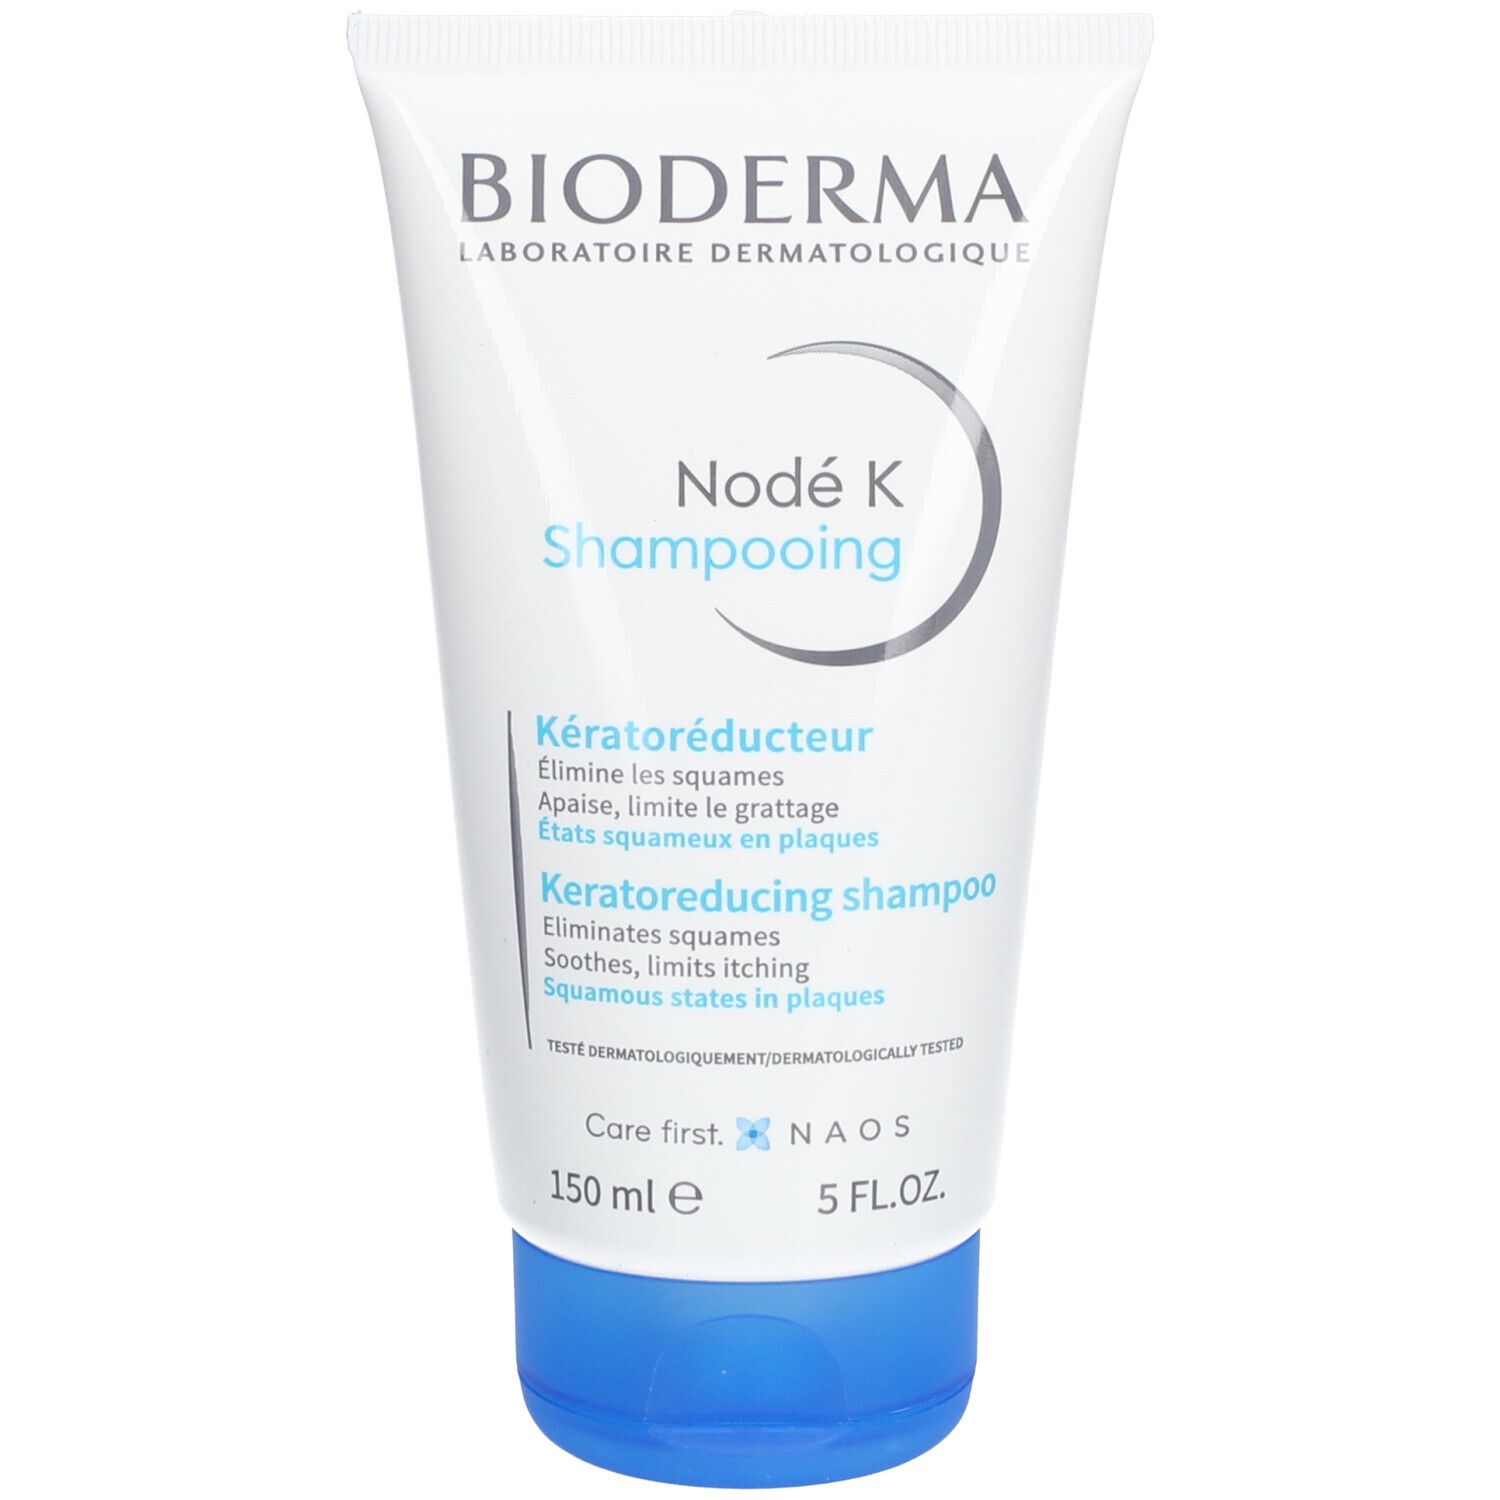 Bioderma Nodé K Shampoo